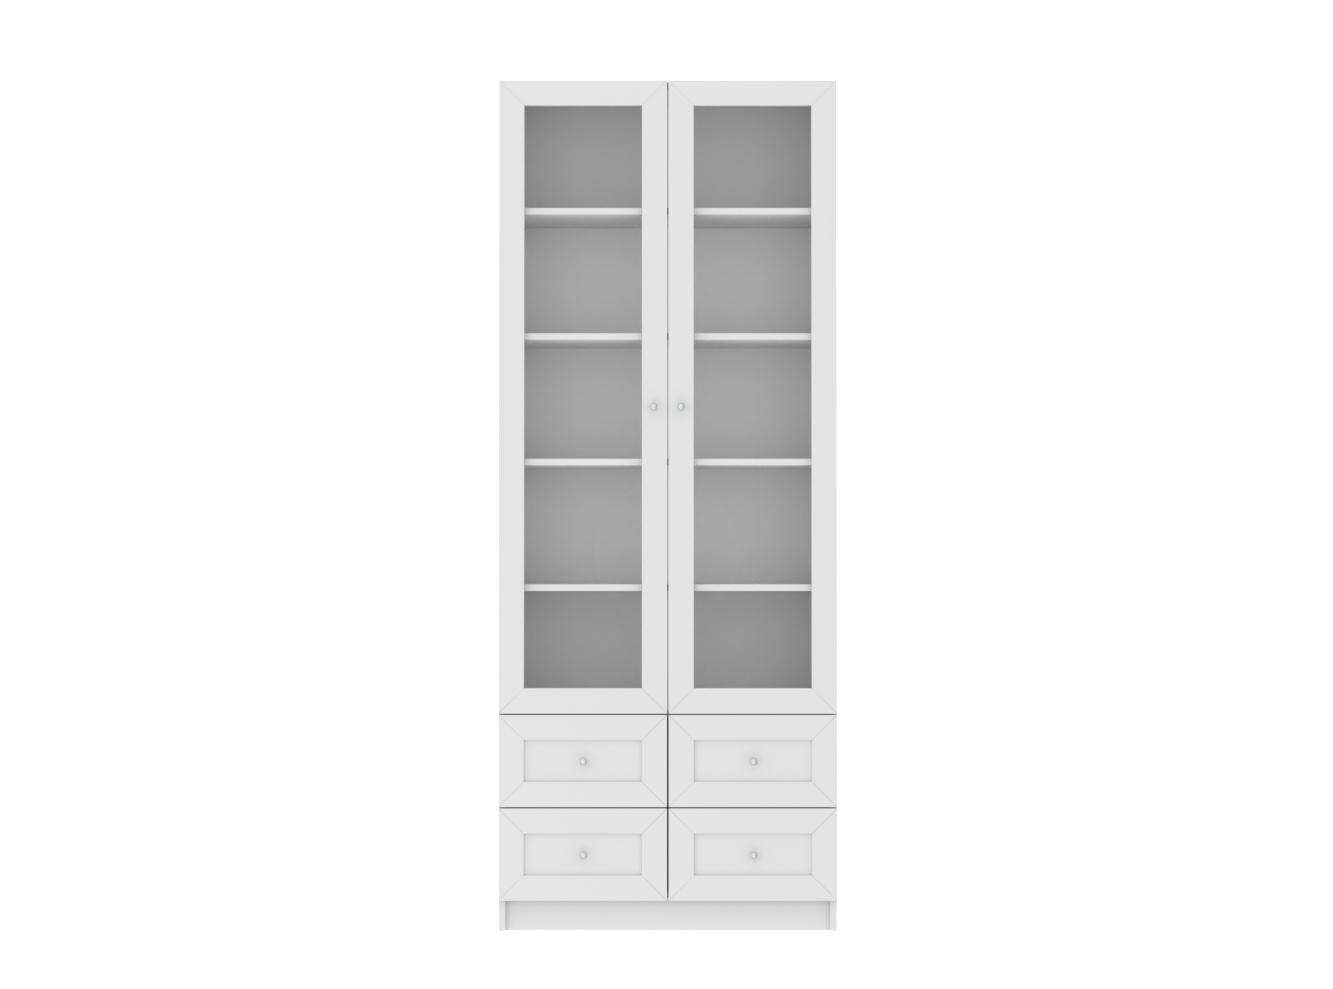  Книжный шкаф Билли 316 white ИКЕА (IKEA) изображение товара